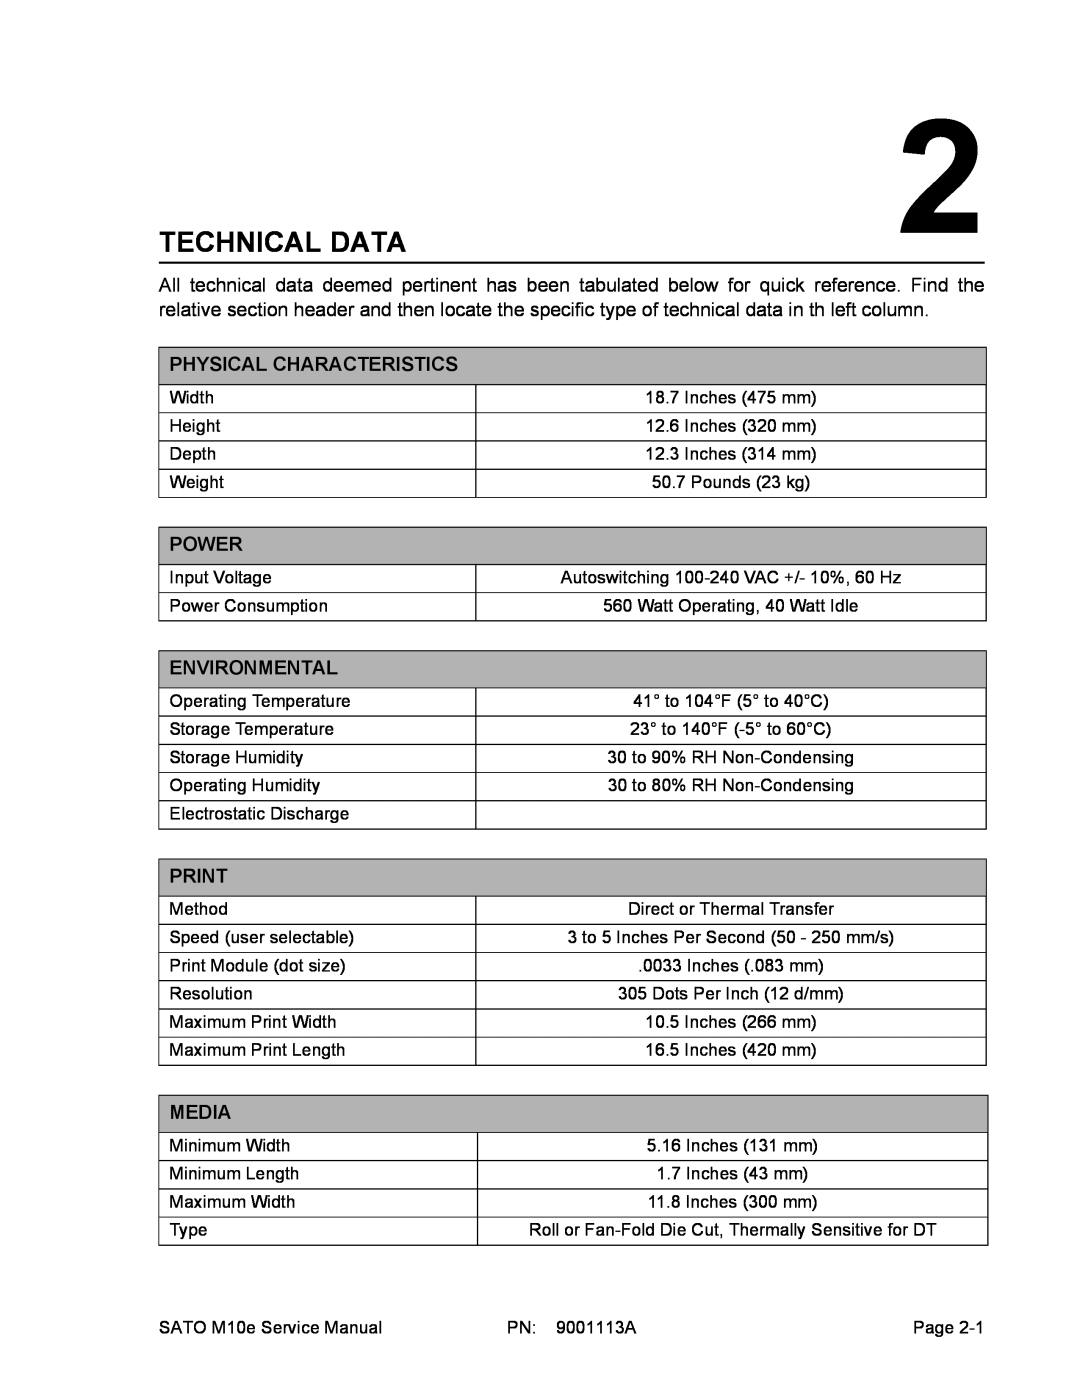 SATO 10e service manual Technical Data, Physical Characteristics, Power, Environmental, Print, Media 